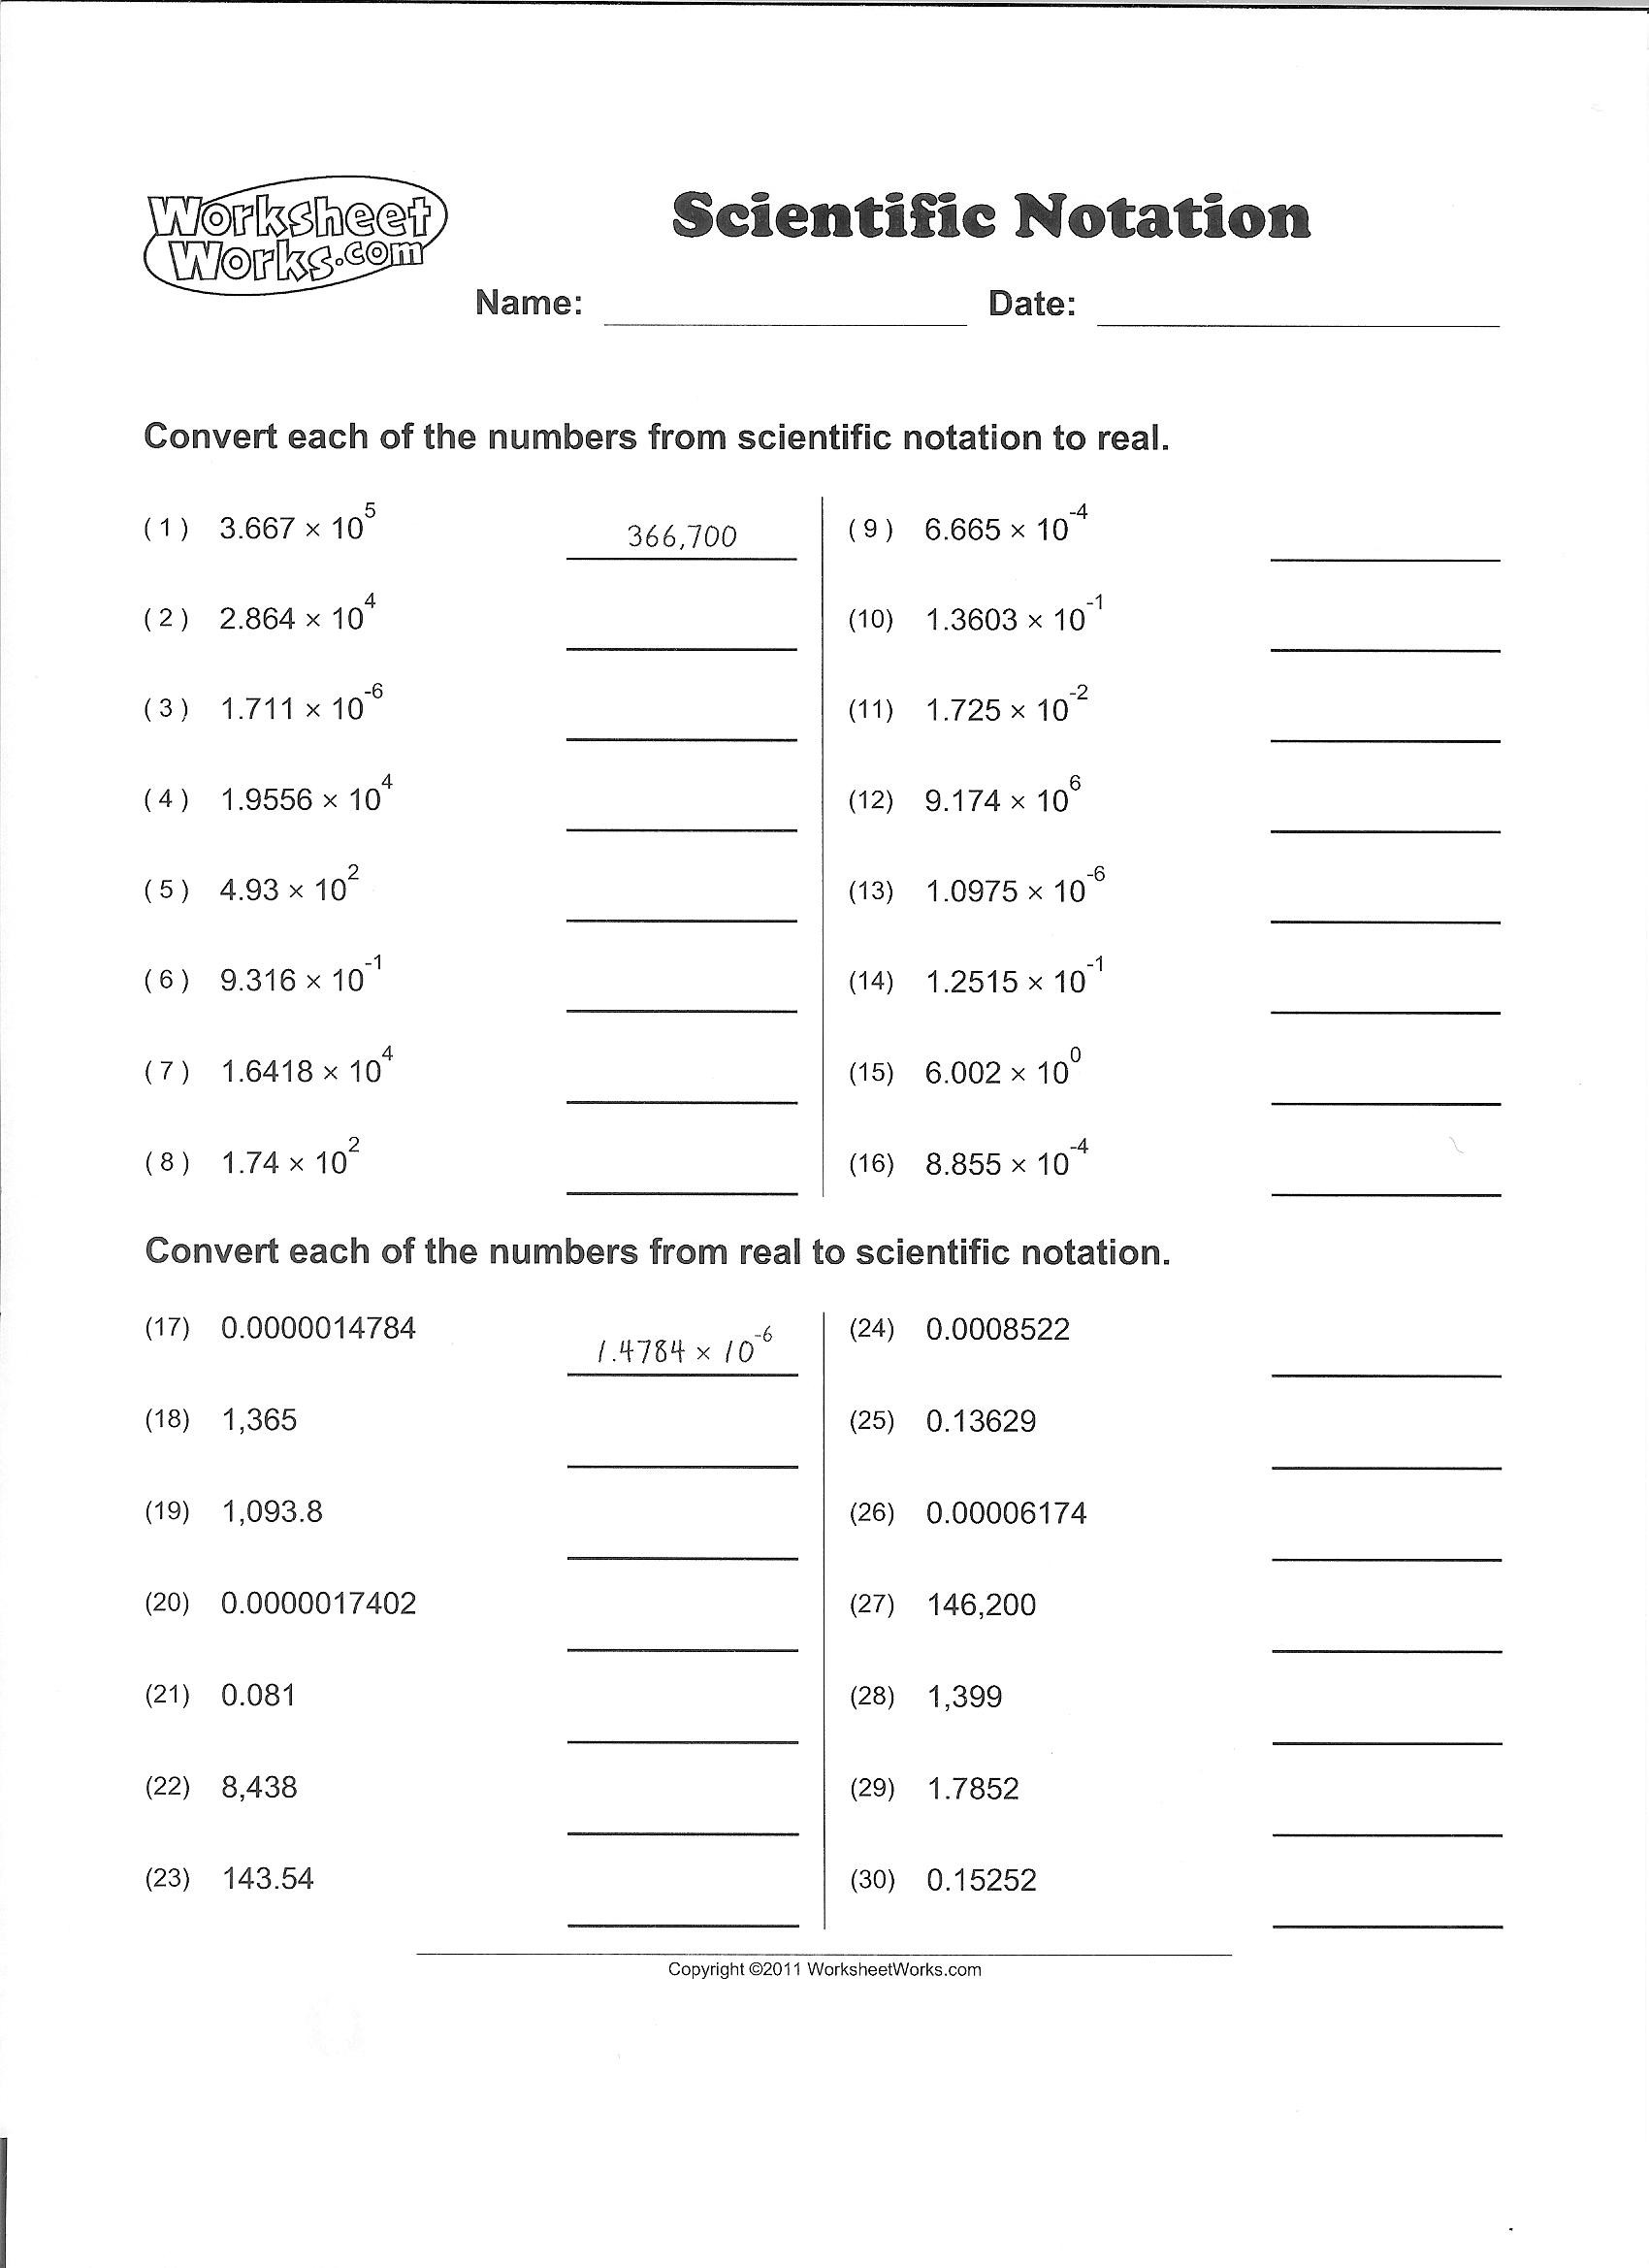 Scientific Notation Worksheet Pdf 28 [ Operations with Scientific Notation Worksheet